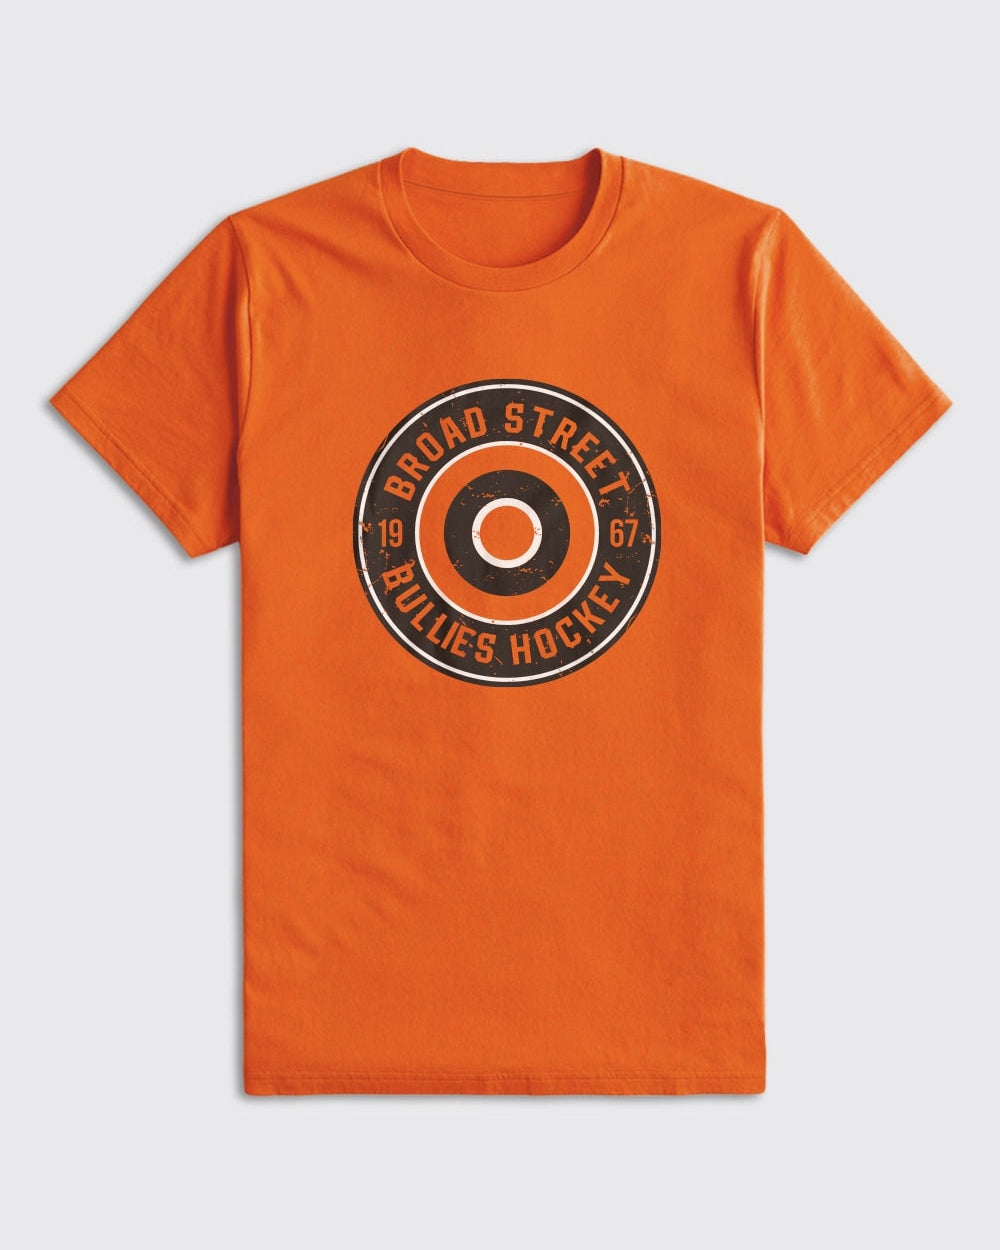 Philadelphia Flyers-Broad Street Bullies Hockey Shirt-Orange-Philly Sports Shirts